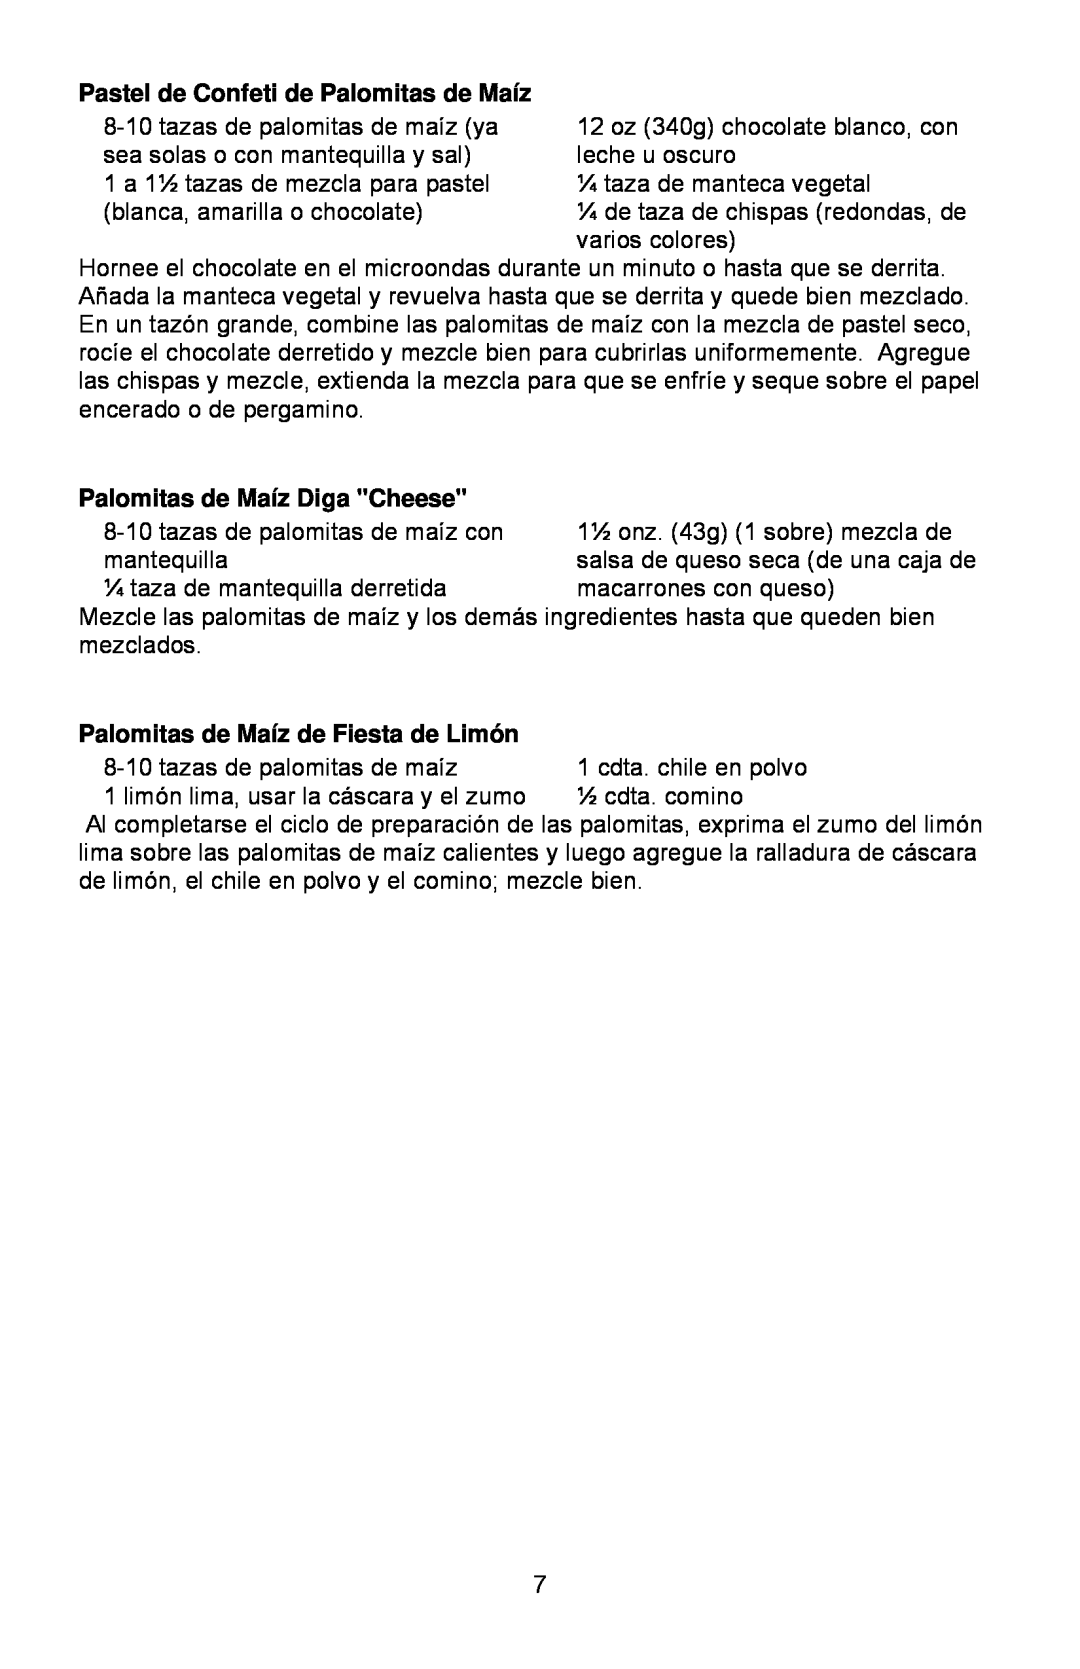 West Bend 2.5 OZ. THEATER-STYLE instruction manual Pastel de Confeti de Palomitas de Maíz, Palomitas de Maíz Diga Cheese 